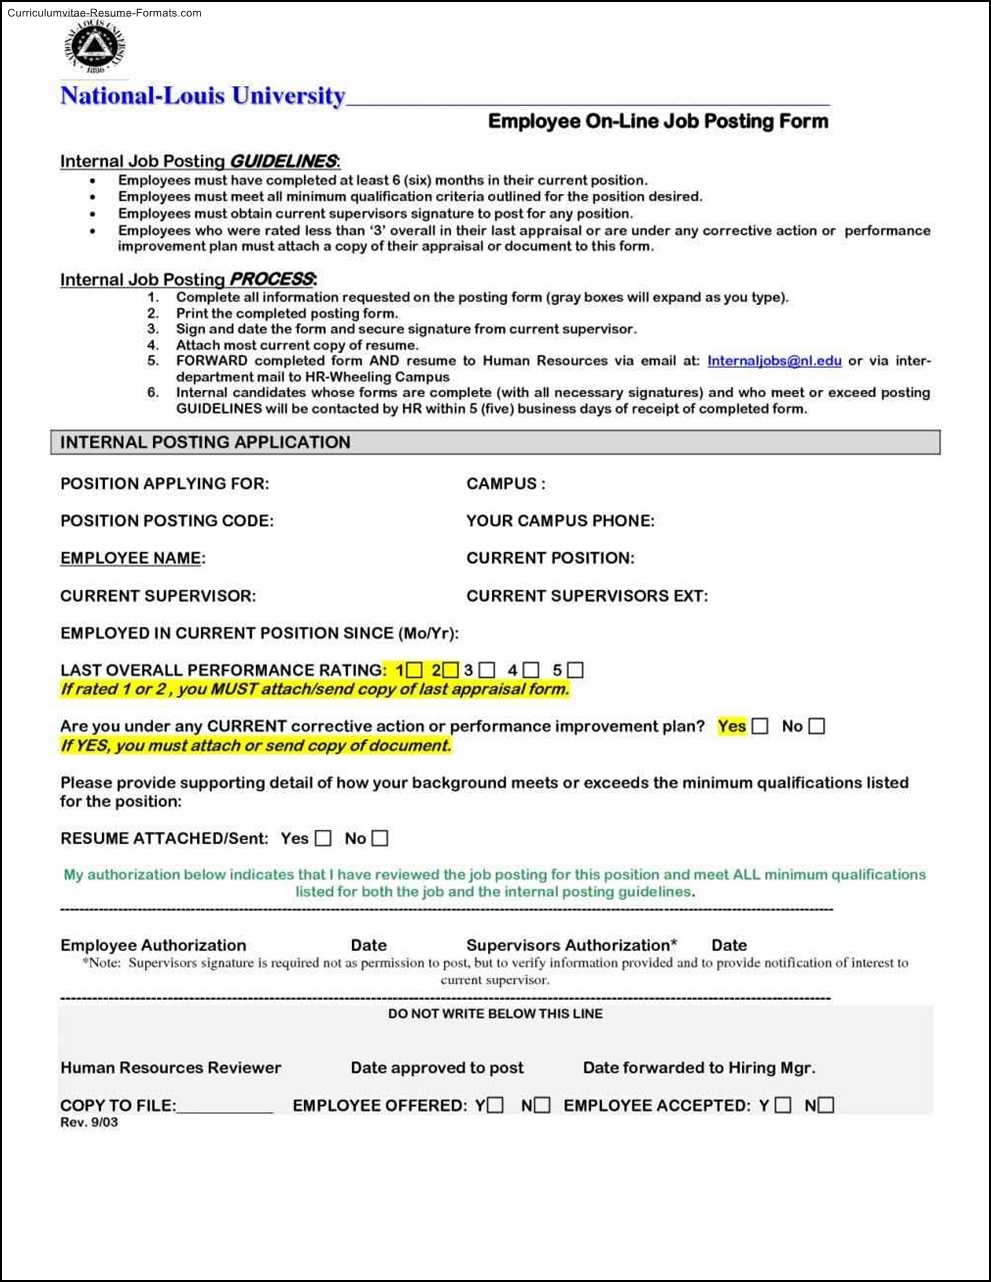 Best resume format for internal job application